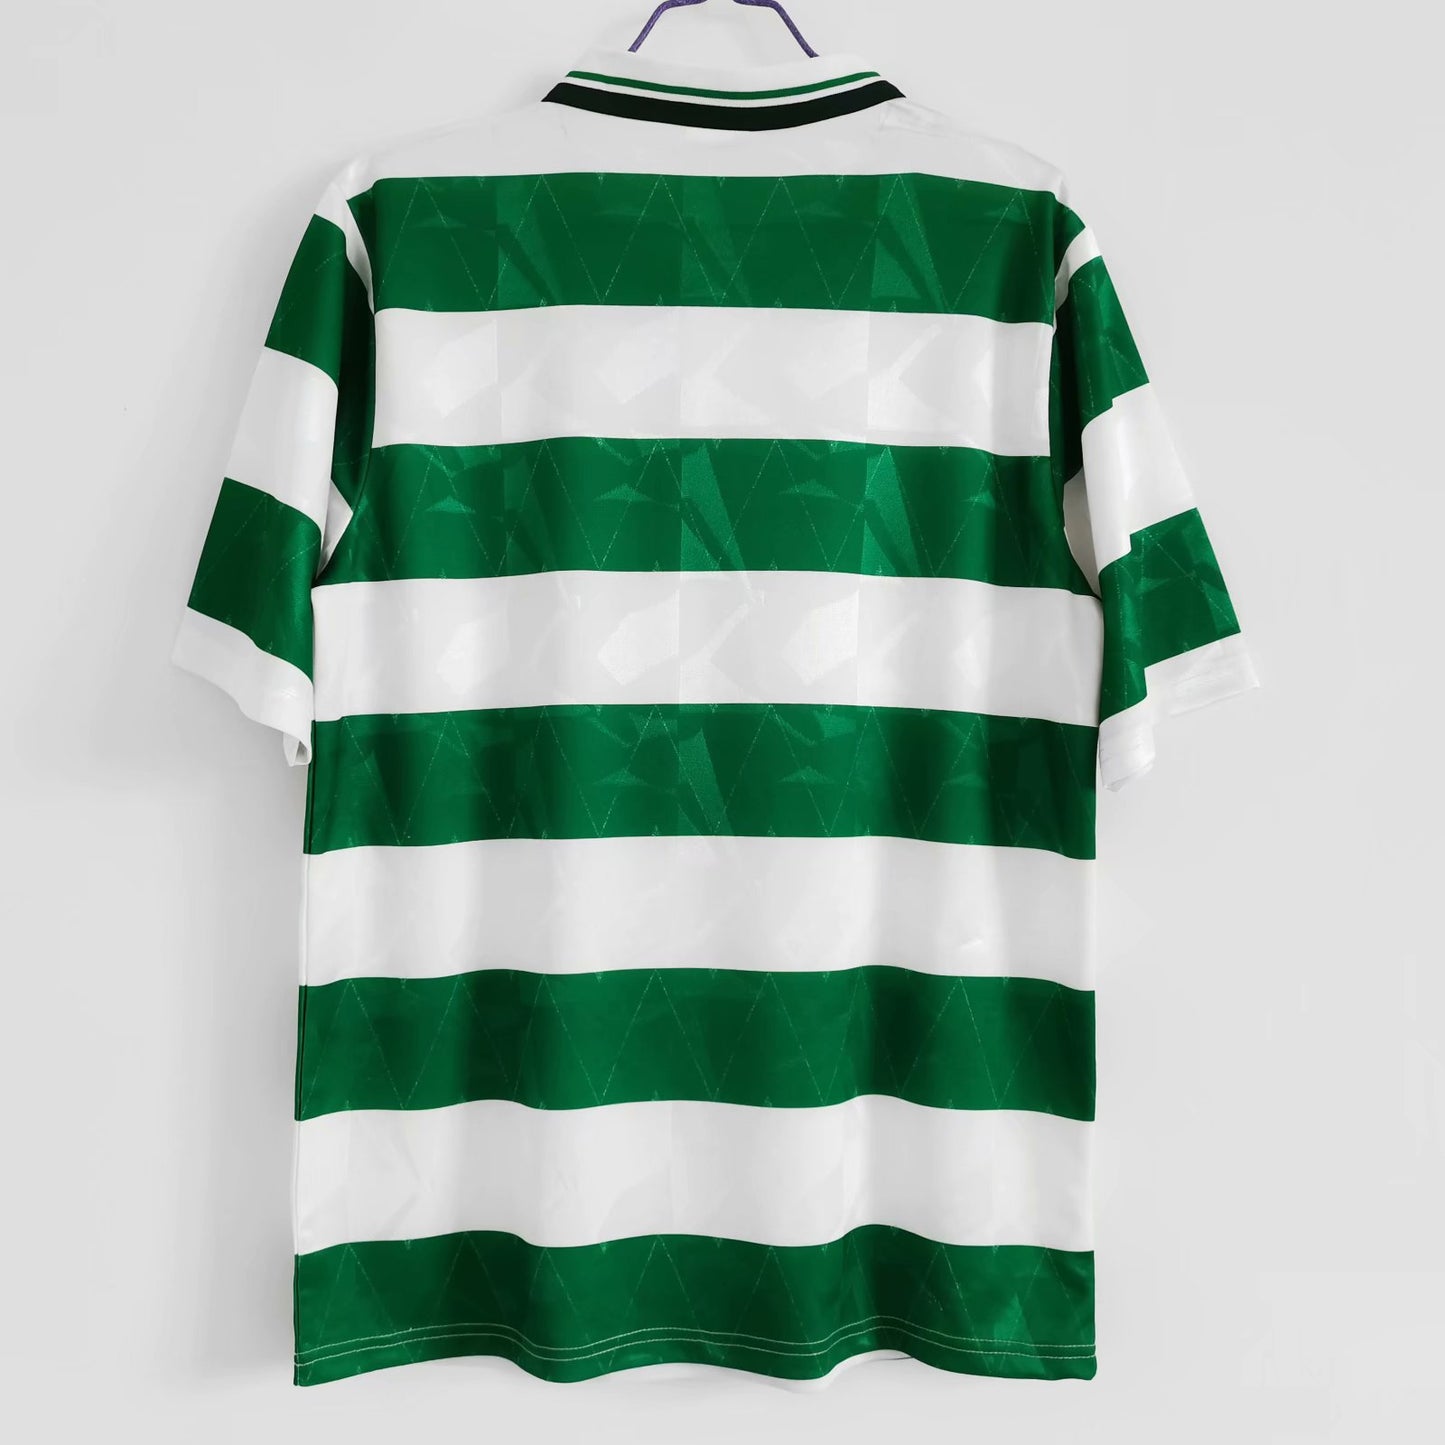 Celtic 89-91 Home Shirt